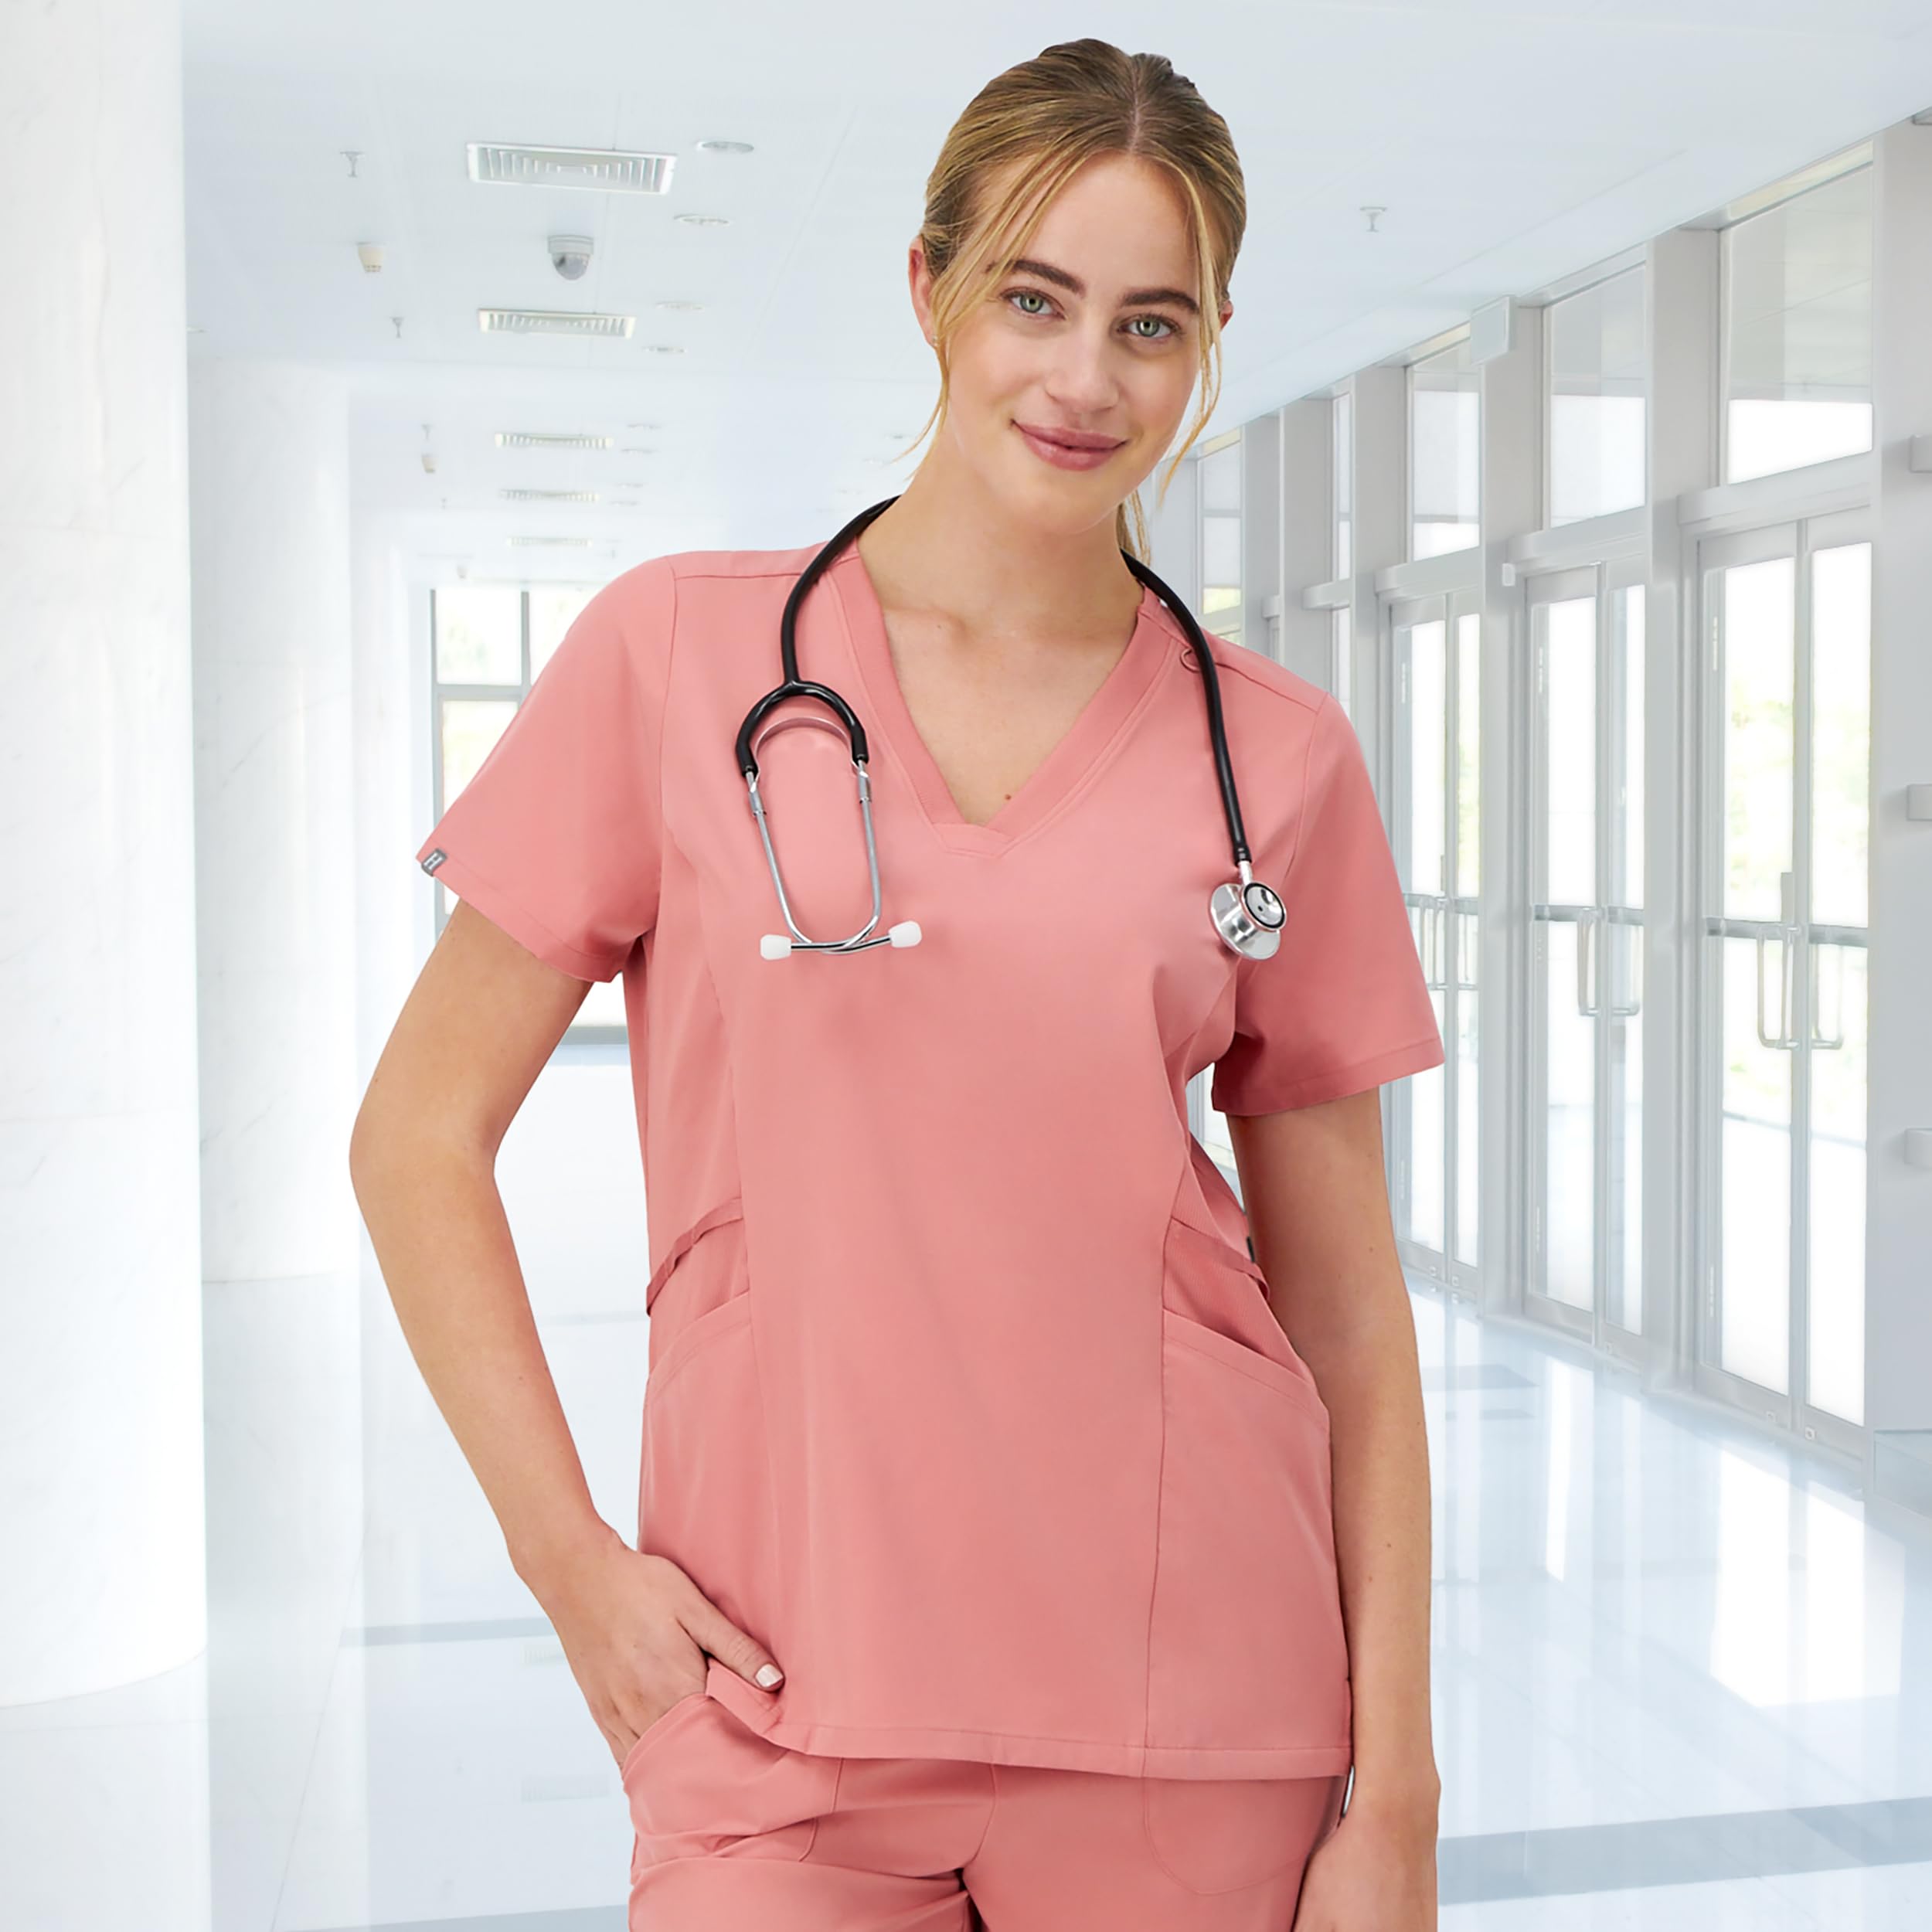 Hanes Women's Scrubs Healthcare Top, Moisture-Wicking Stretch Scrub Shirt, Ribbed Side Panels